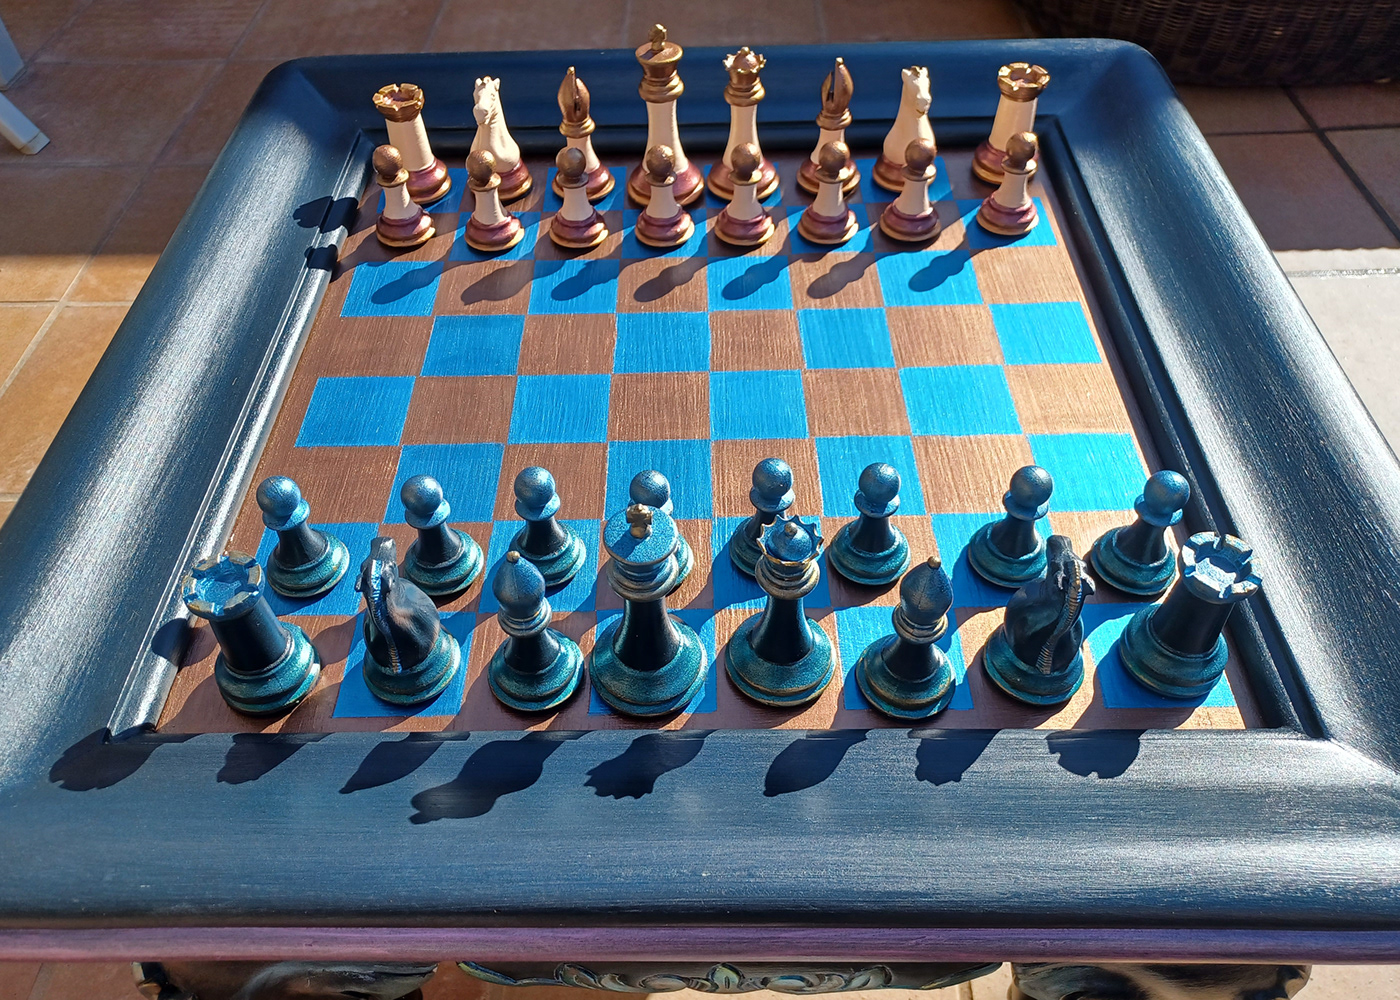 Ajedrez chess madera Reciclar recuperar rediseñar crear arte JaqueMate